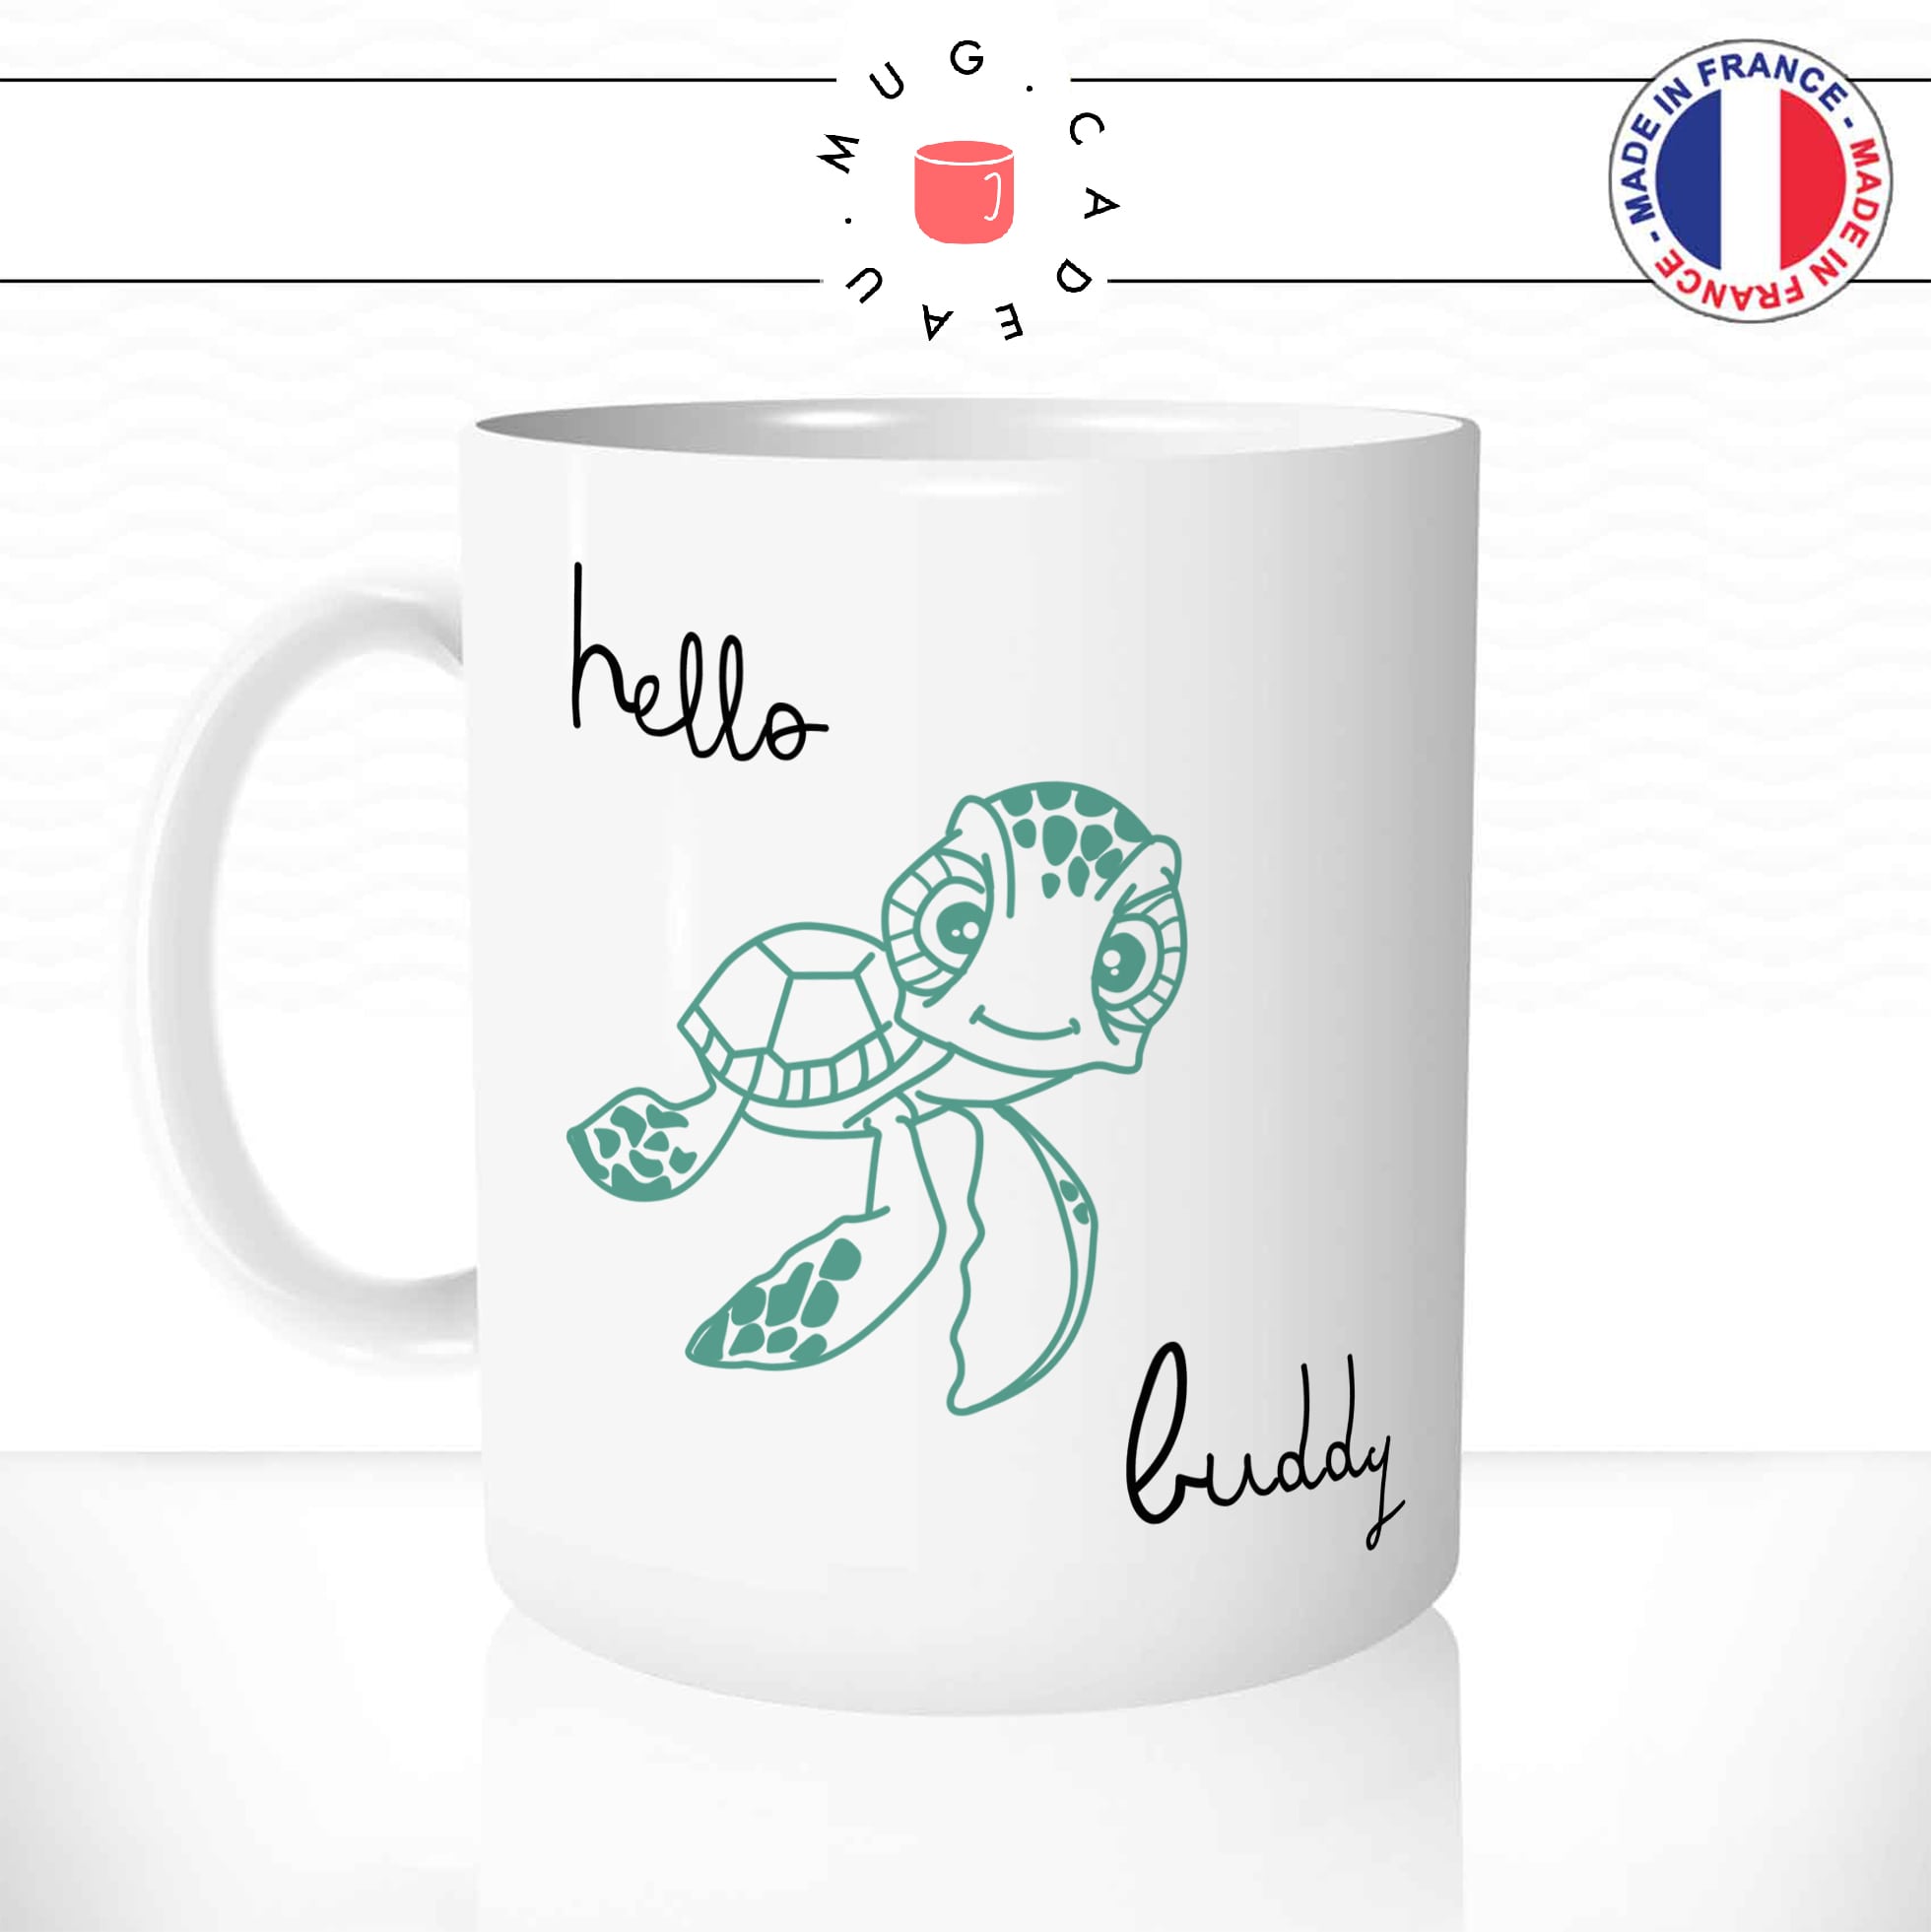 mug-tasse-ref2-tortue-verte-enfant-dessin-animé-mignon-hello-buddy-cafe-the-mugs-tasses-personnalise-anse-gauche-min